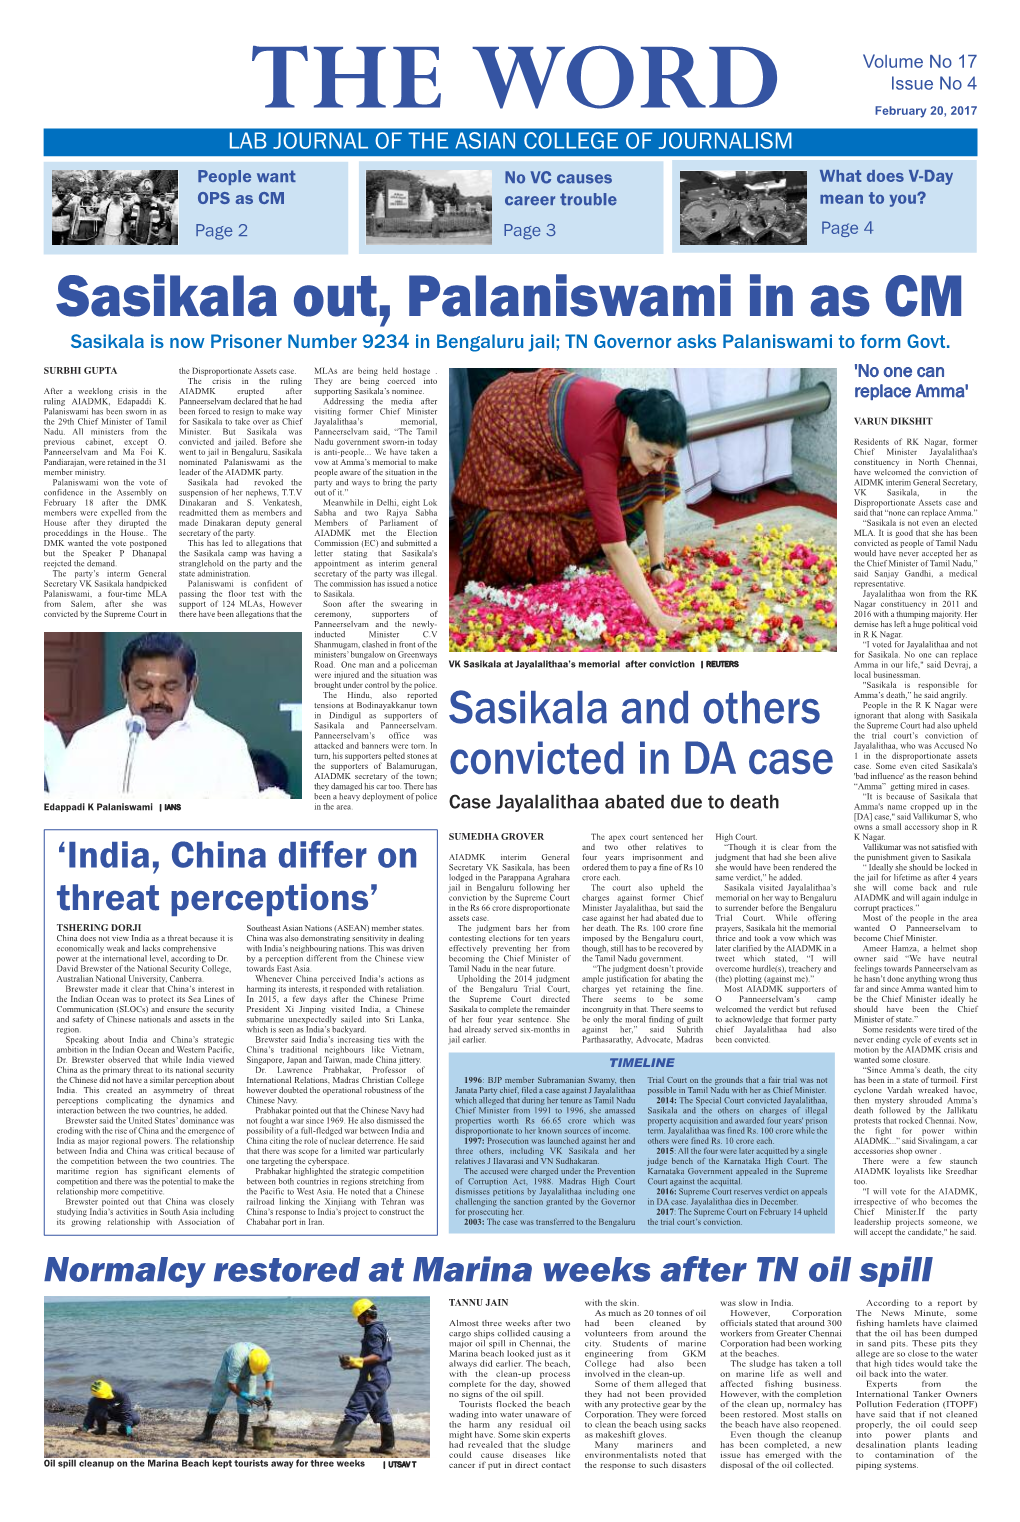 Sasikala Out, Palaniswami in As CM